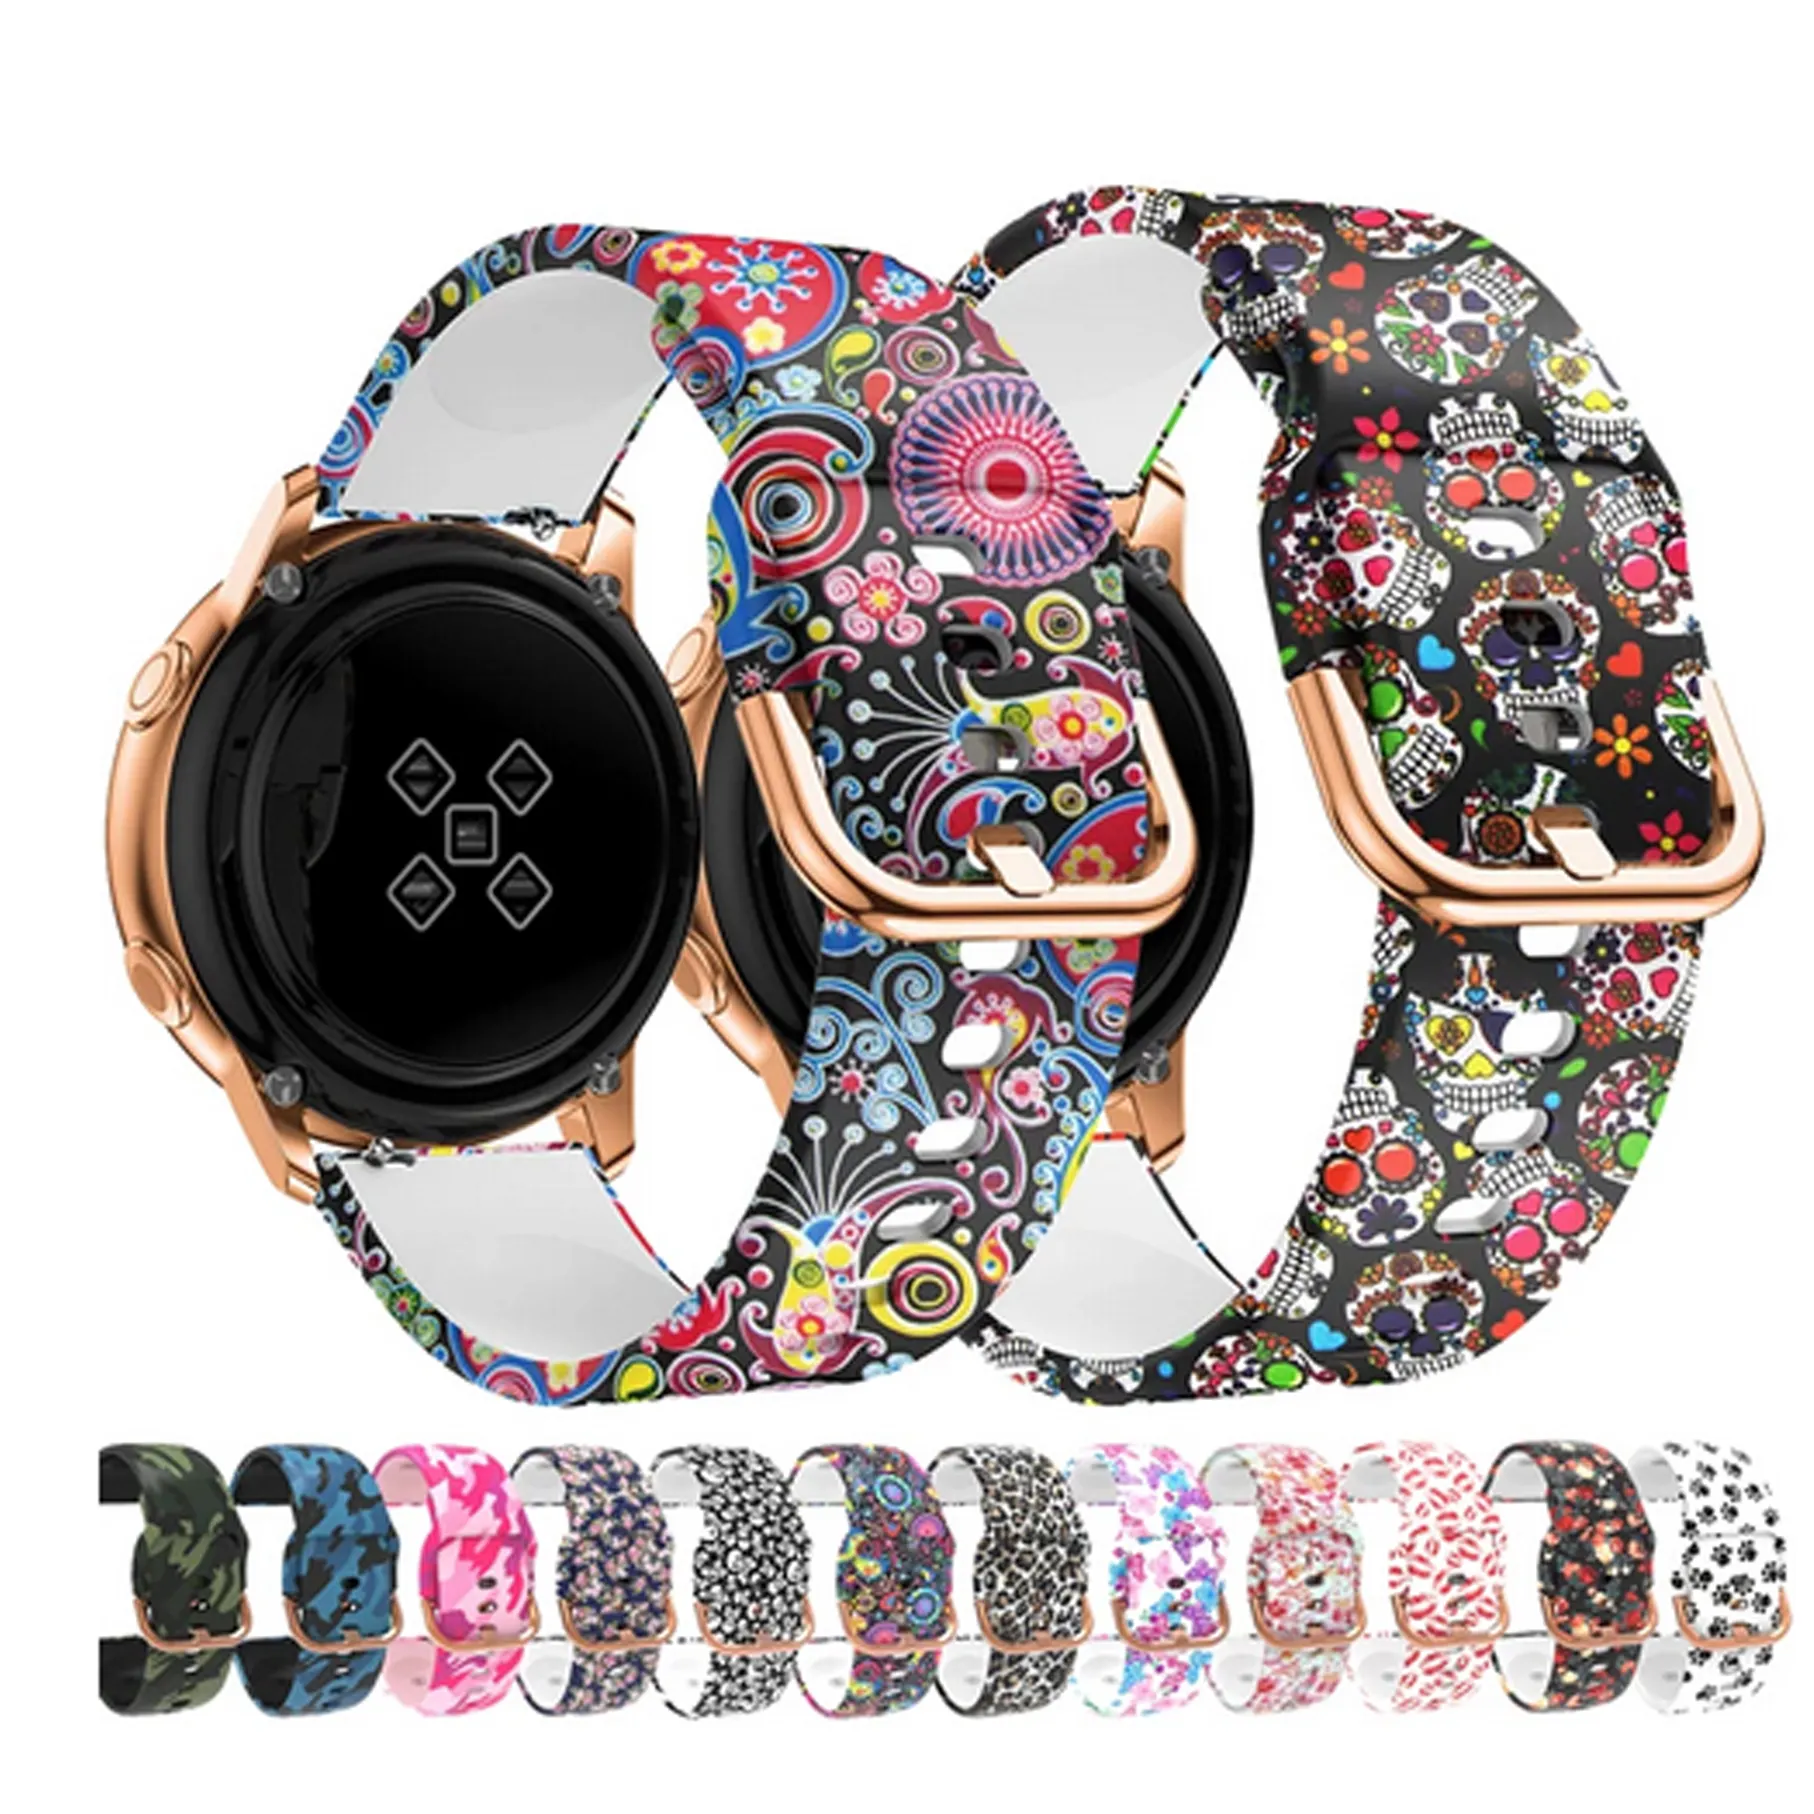 20mm Printing Silicone Watchband for Samsung Galaxy Watch Active 42mm Gear Sport S2 Garmin Amazfit Bracelet Band Strap Correa